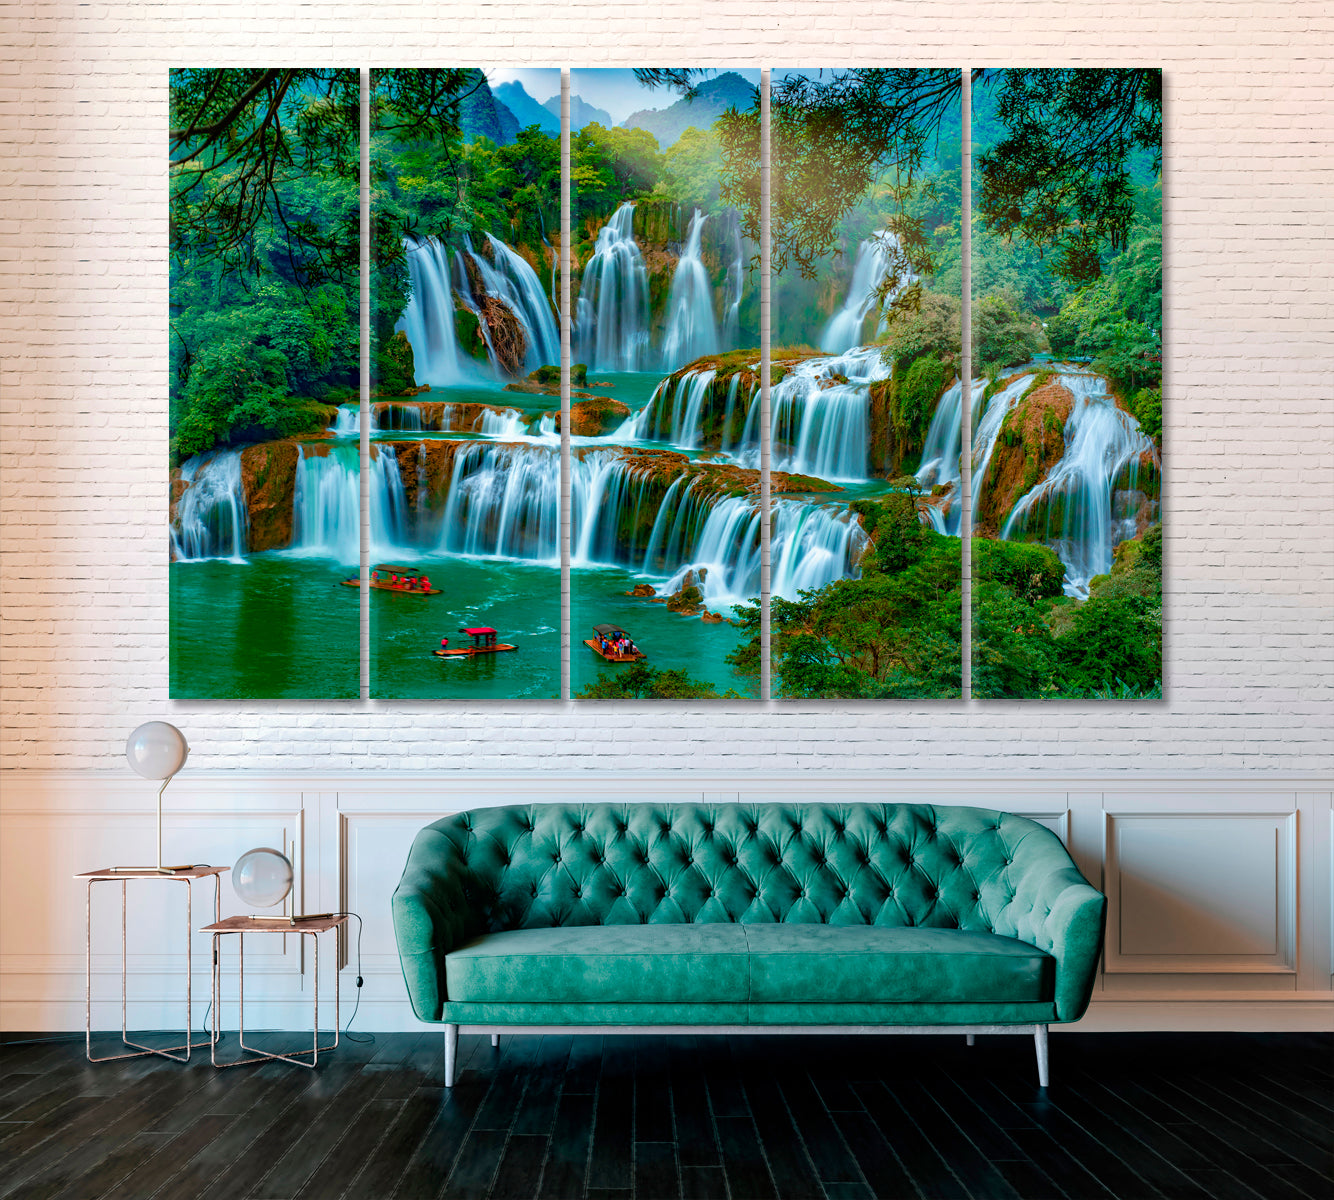 Nanning Detian Waterfall (Ban Gioc Waterfall) Vietnam Canvas Print ArtLexy 5 Panels 36"x24" inches 